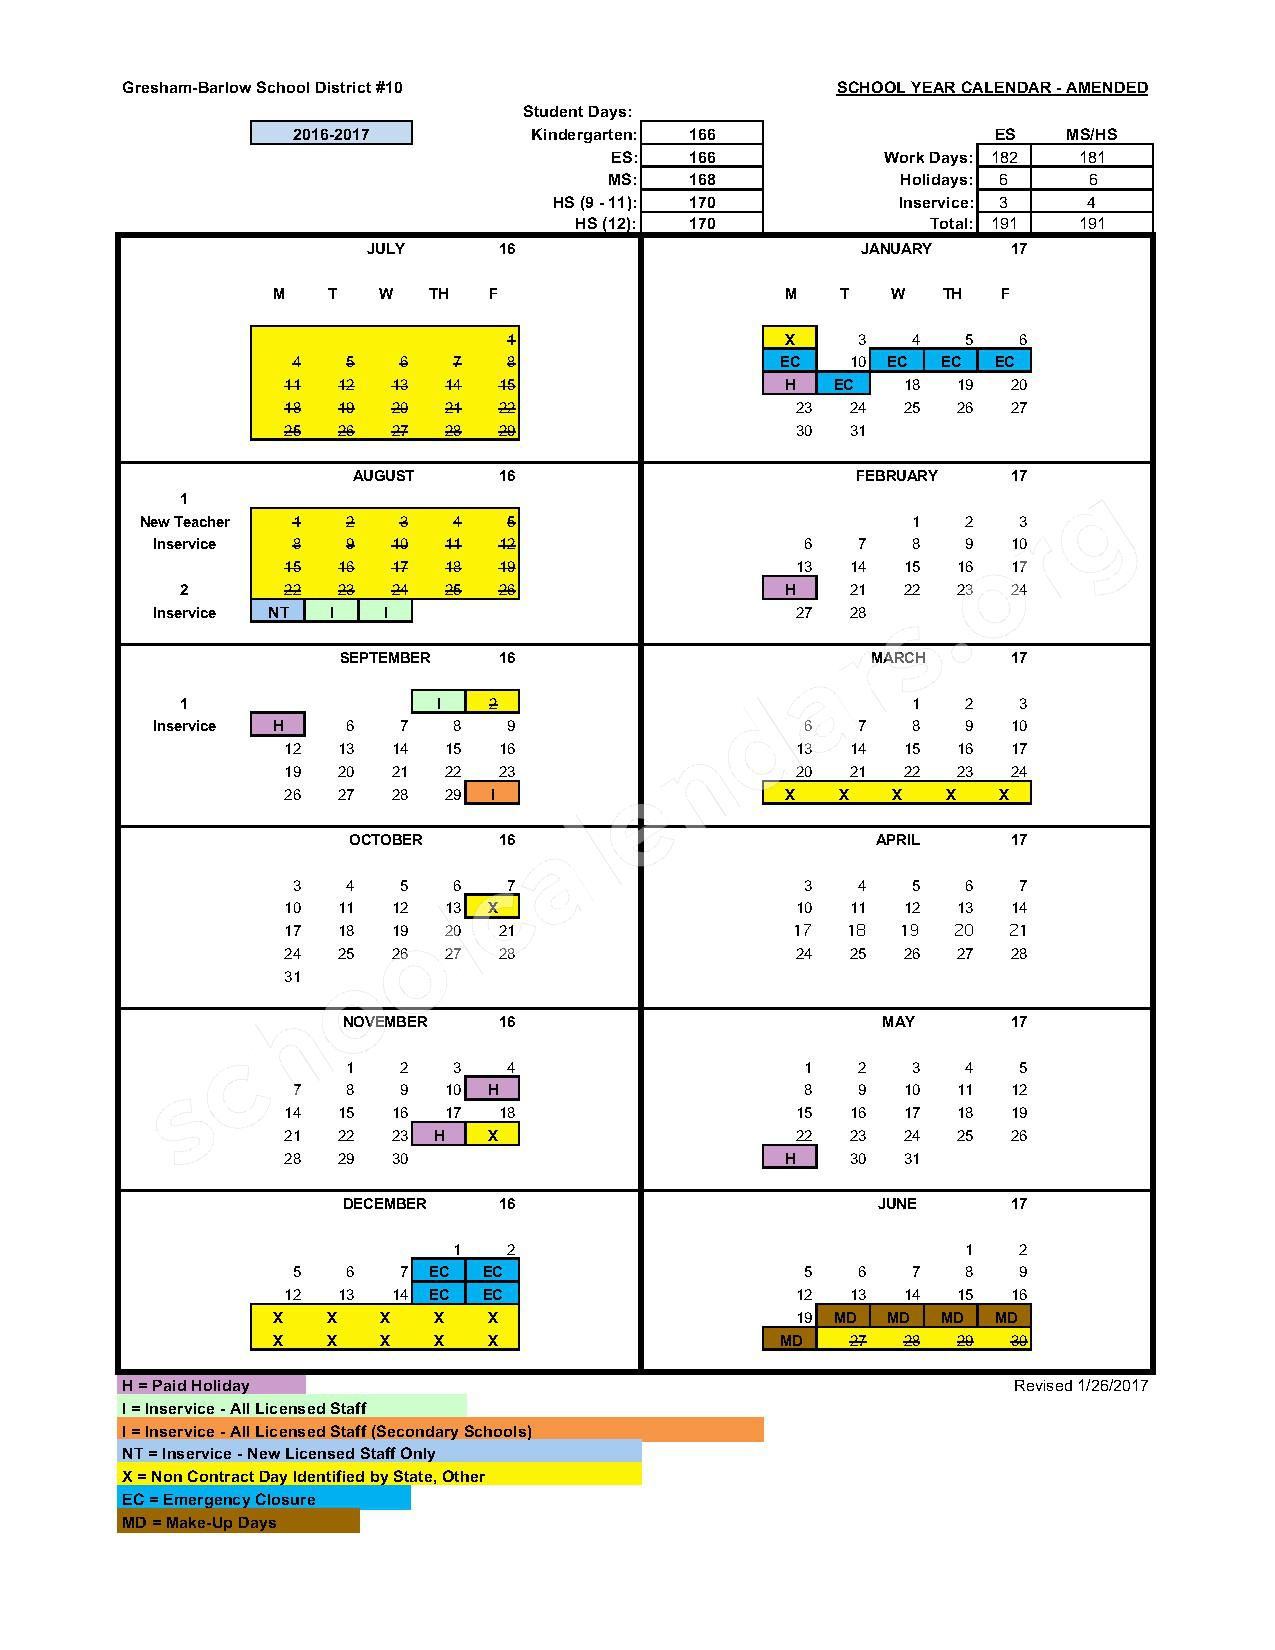 Gresham Barlow School District Calendar 2024